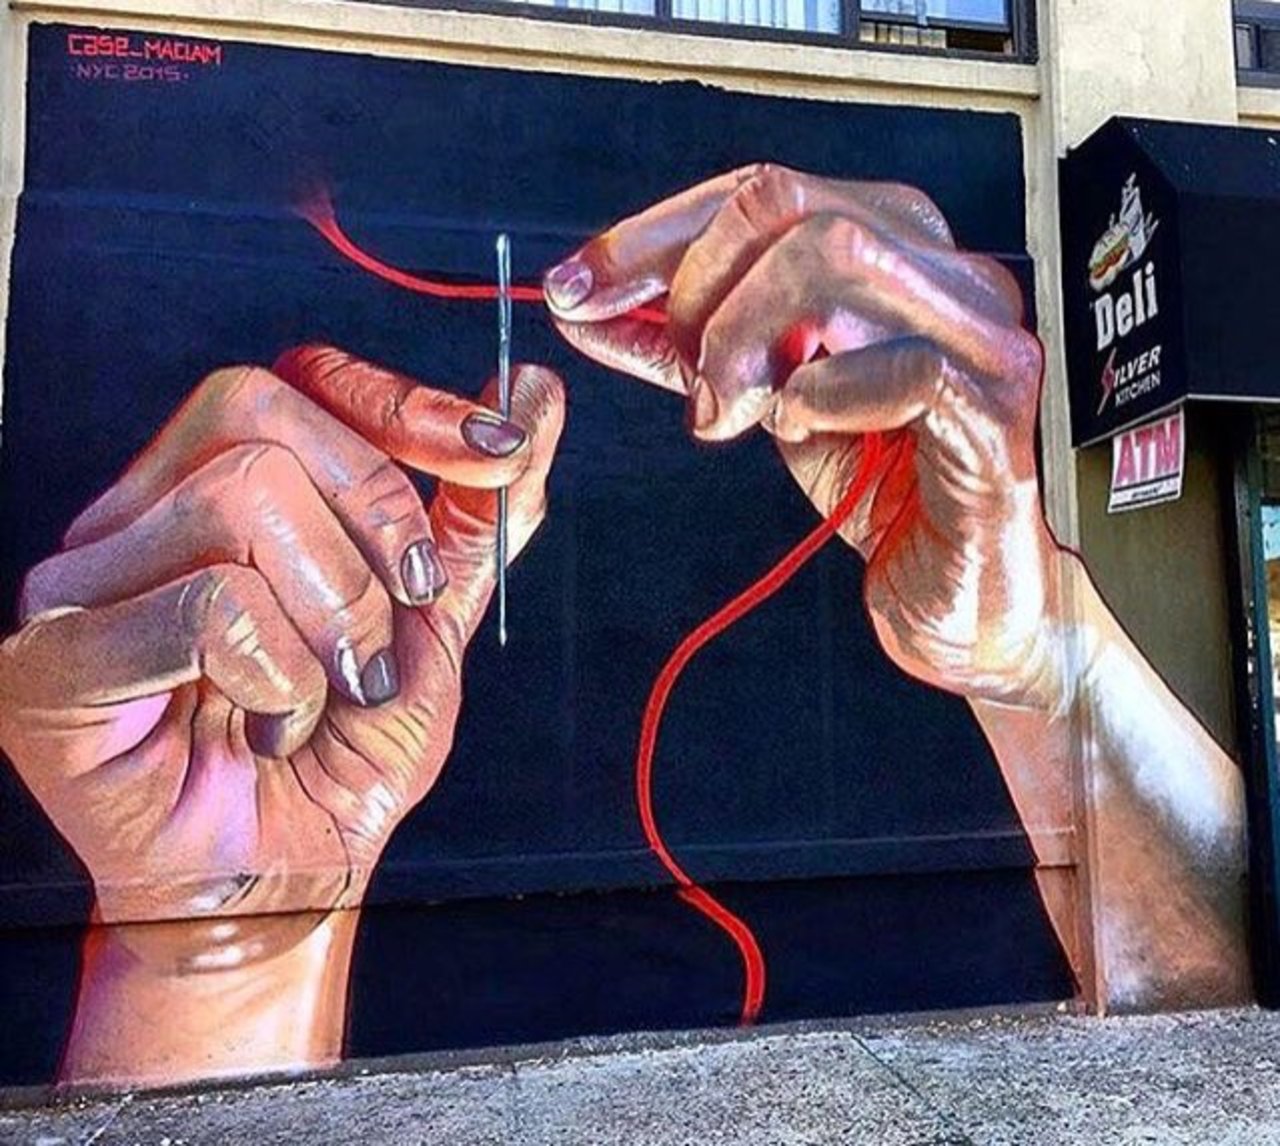 New Street Art by Case Ma'Claim in NYC 

#art #graffiti #mural #streetart https://t.co/rLbbszMmPs